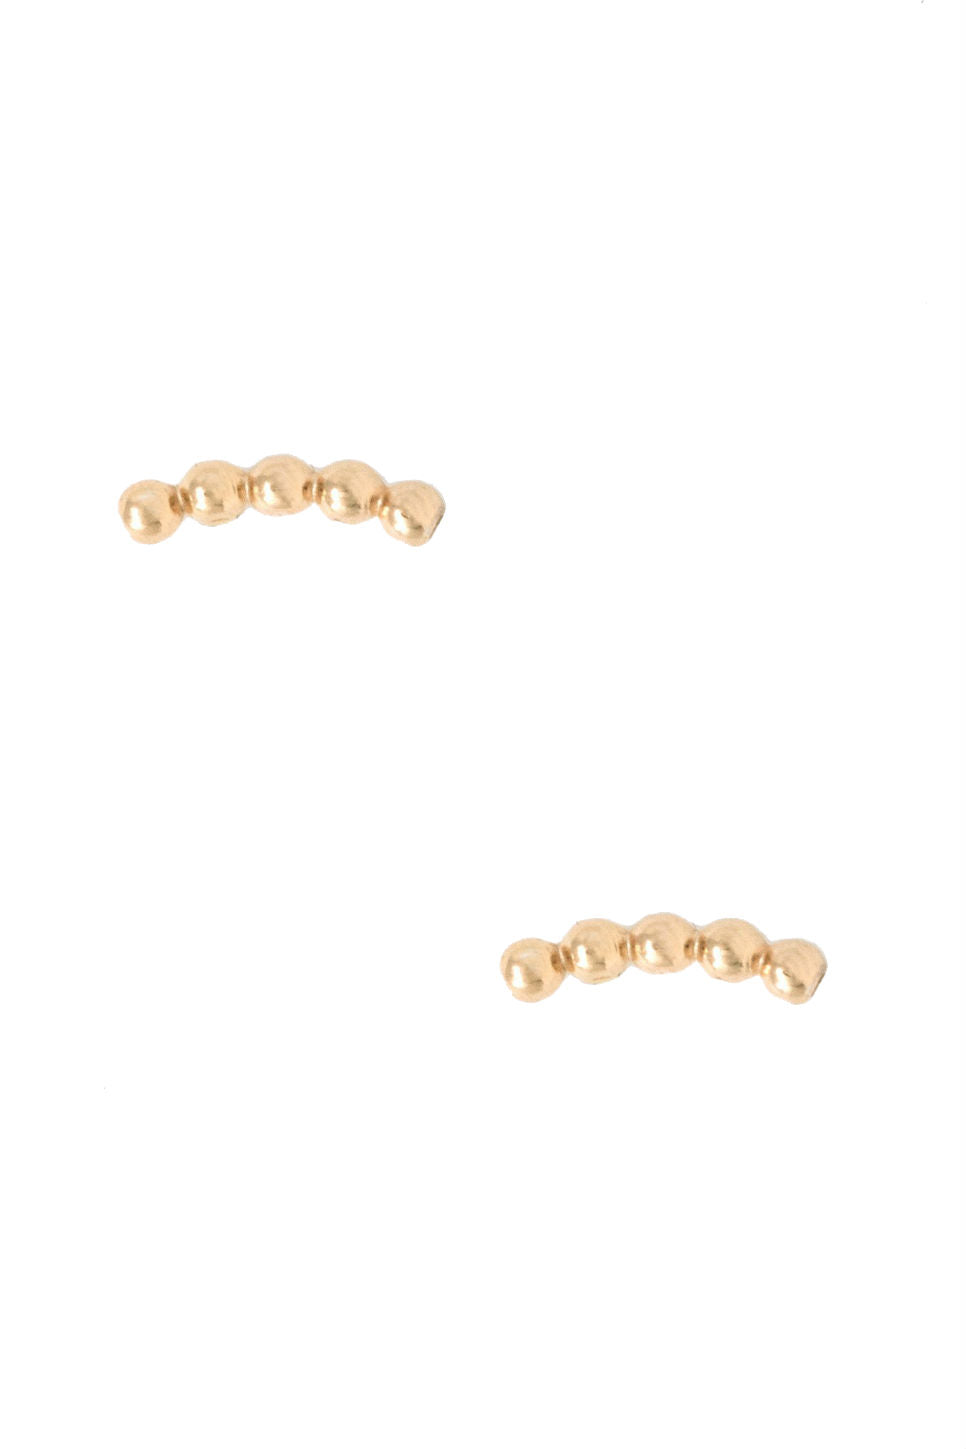 Able - Caesar Stud Earrings - Gold